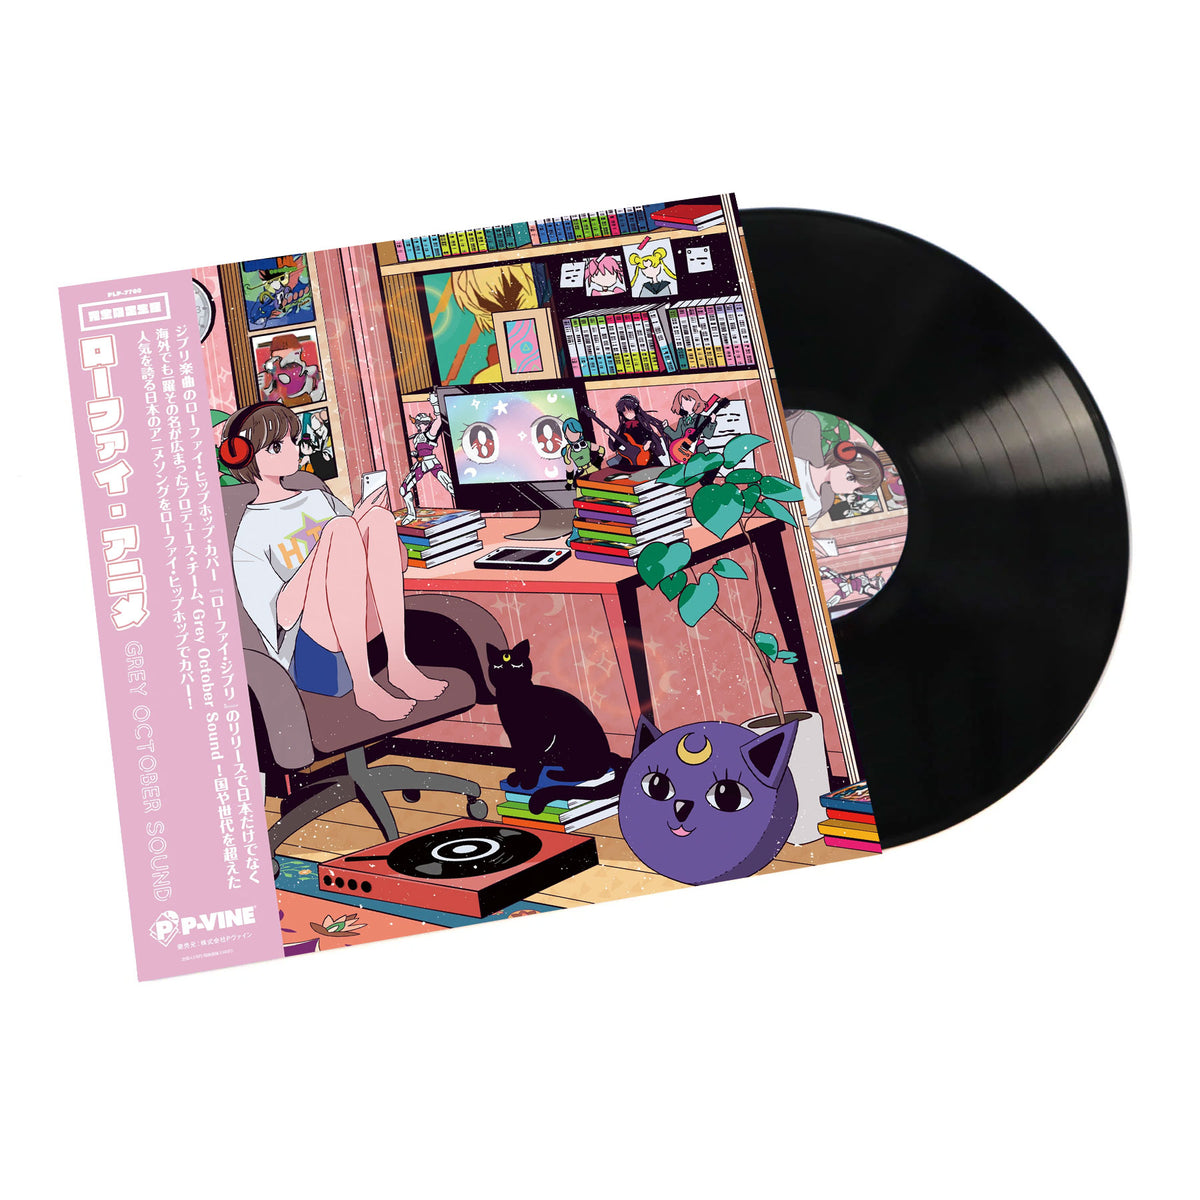 Studio Ghibli Themes 7 Vinyl Boxset at TurntableLab.com